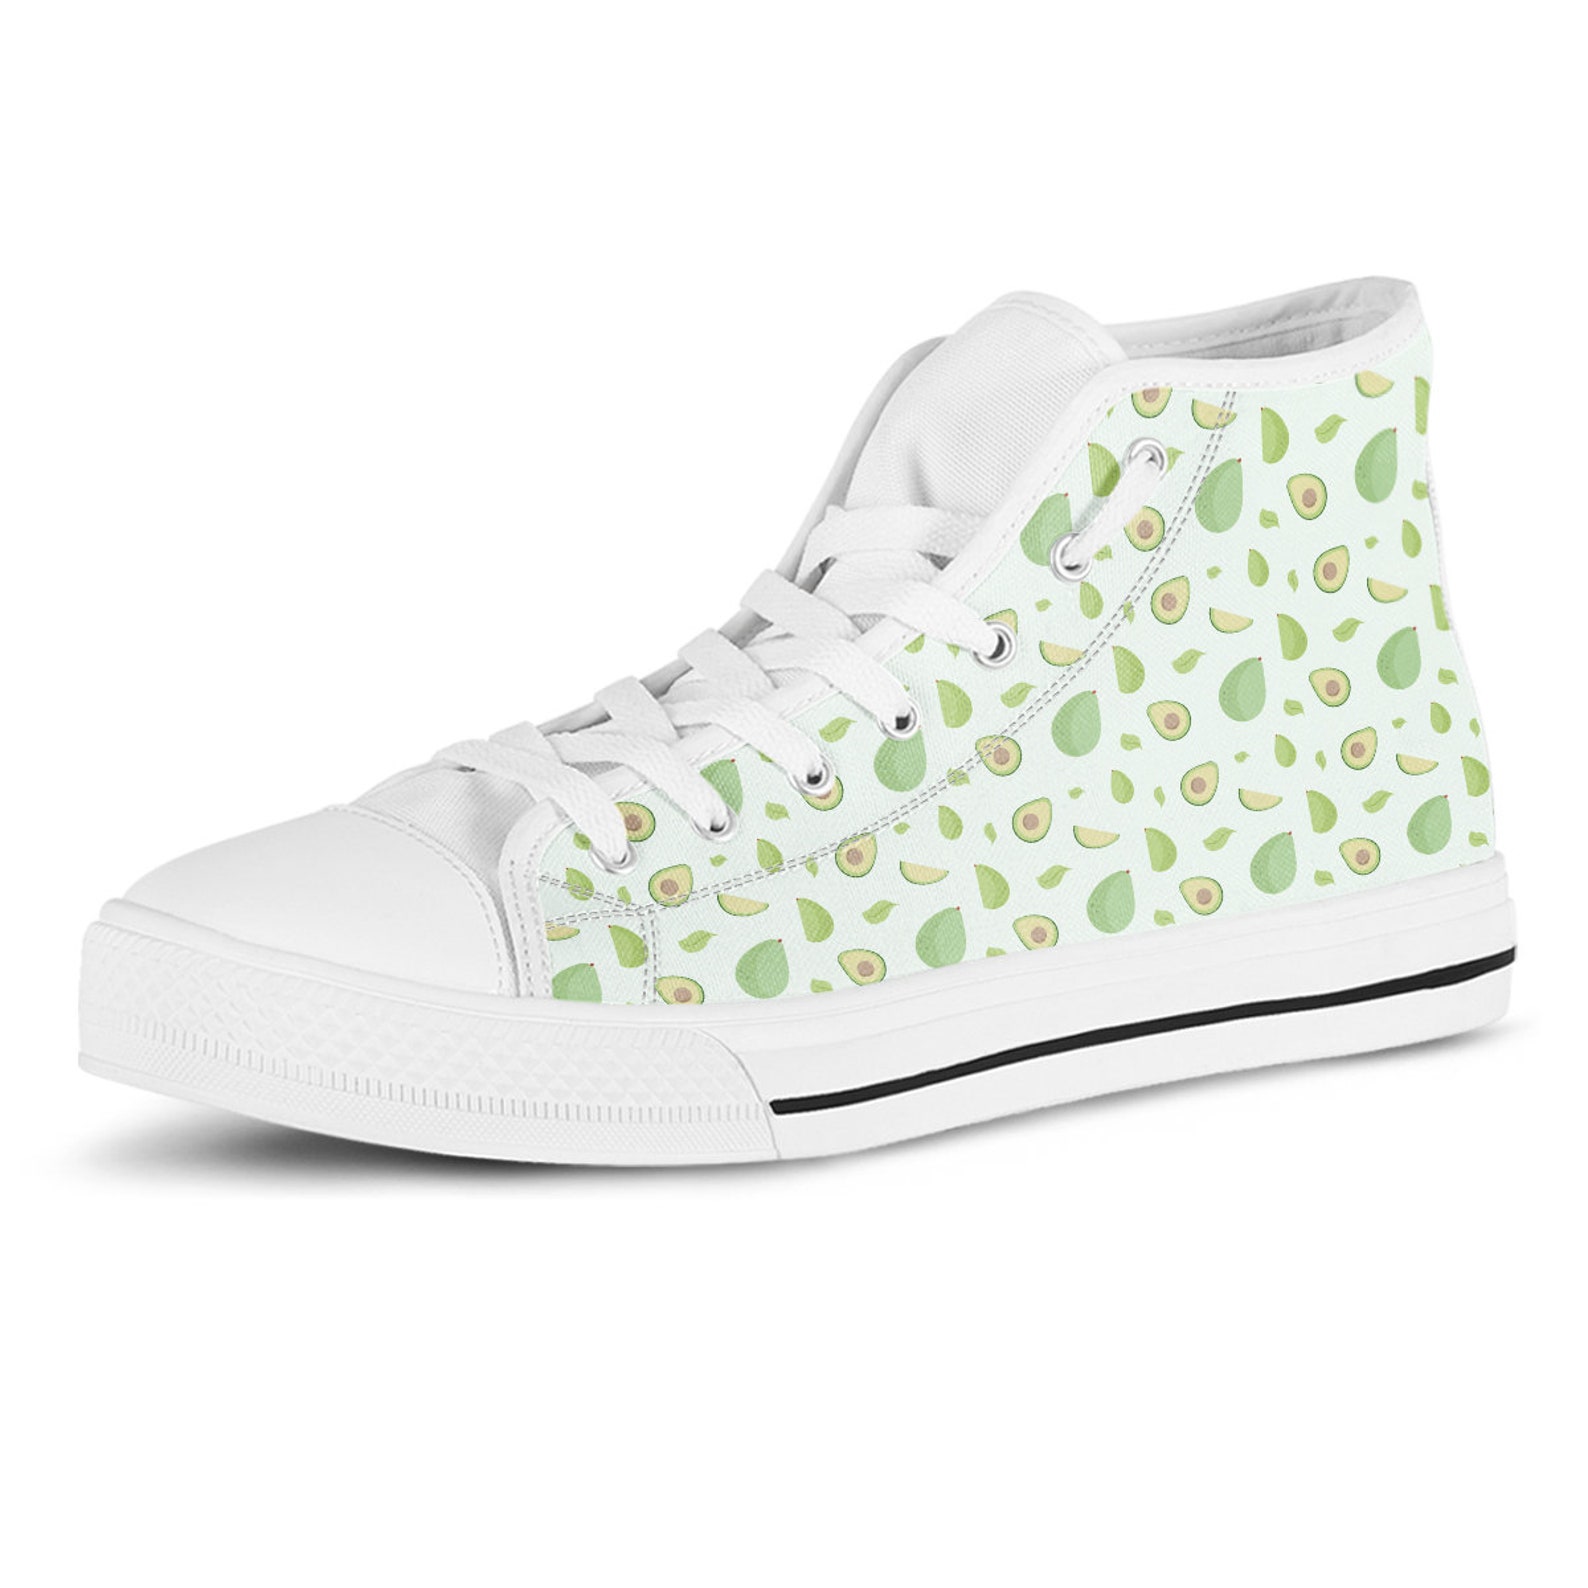 Avocado High top Shoes Fruit Shoes Women Sneakers Cute | Etsy